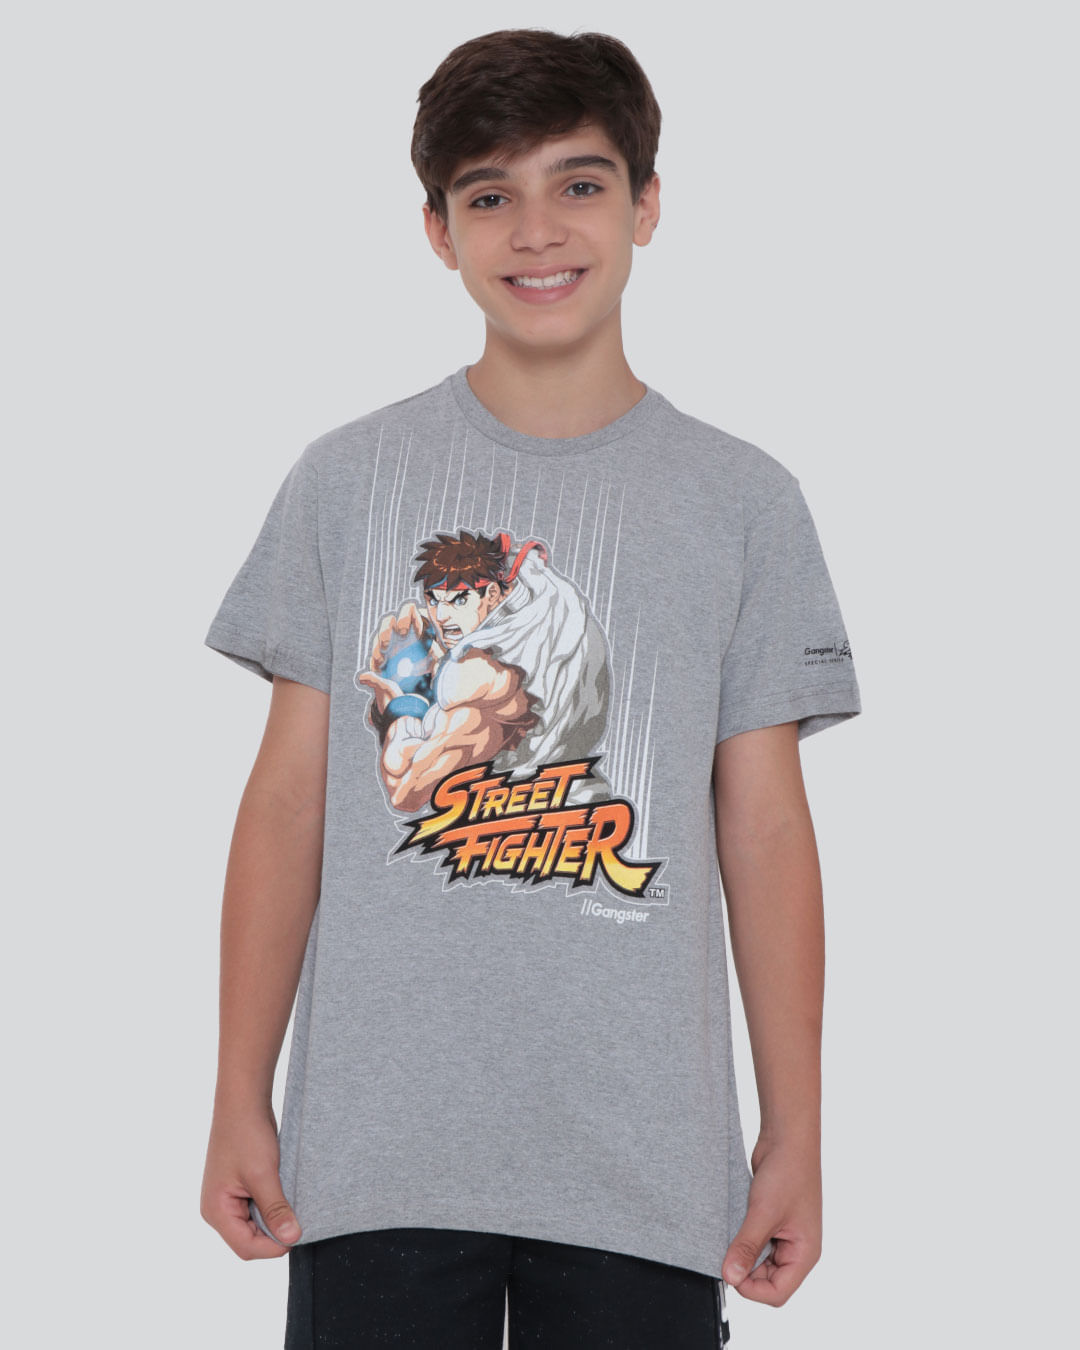 Camiseta Juvenil Gangster Ryu Street Fighter Mescla Cinza